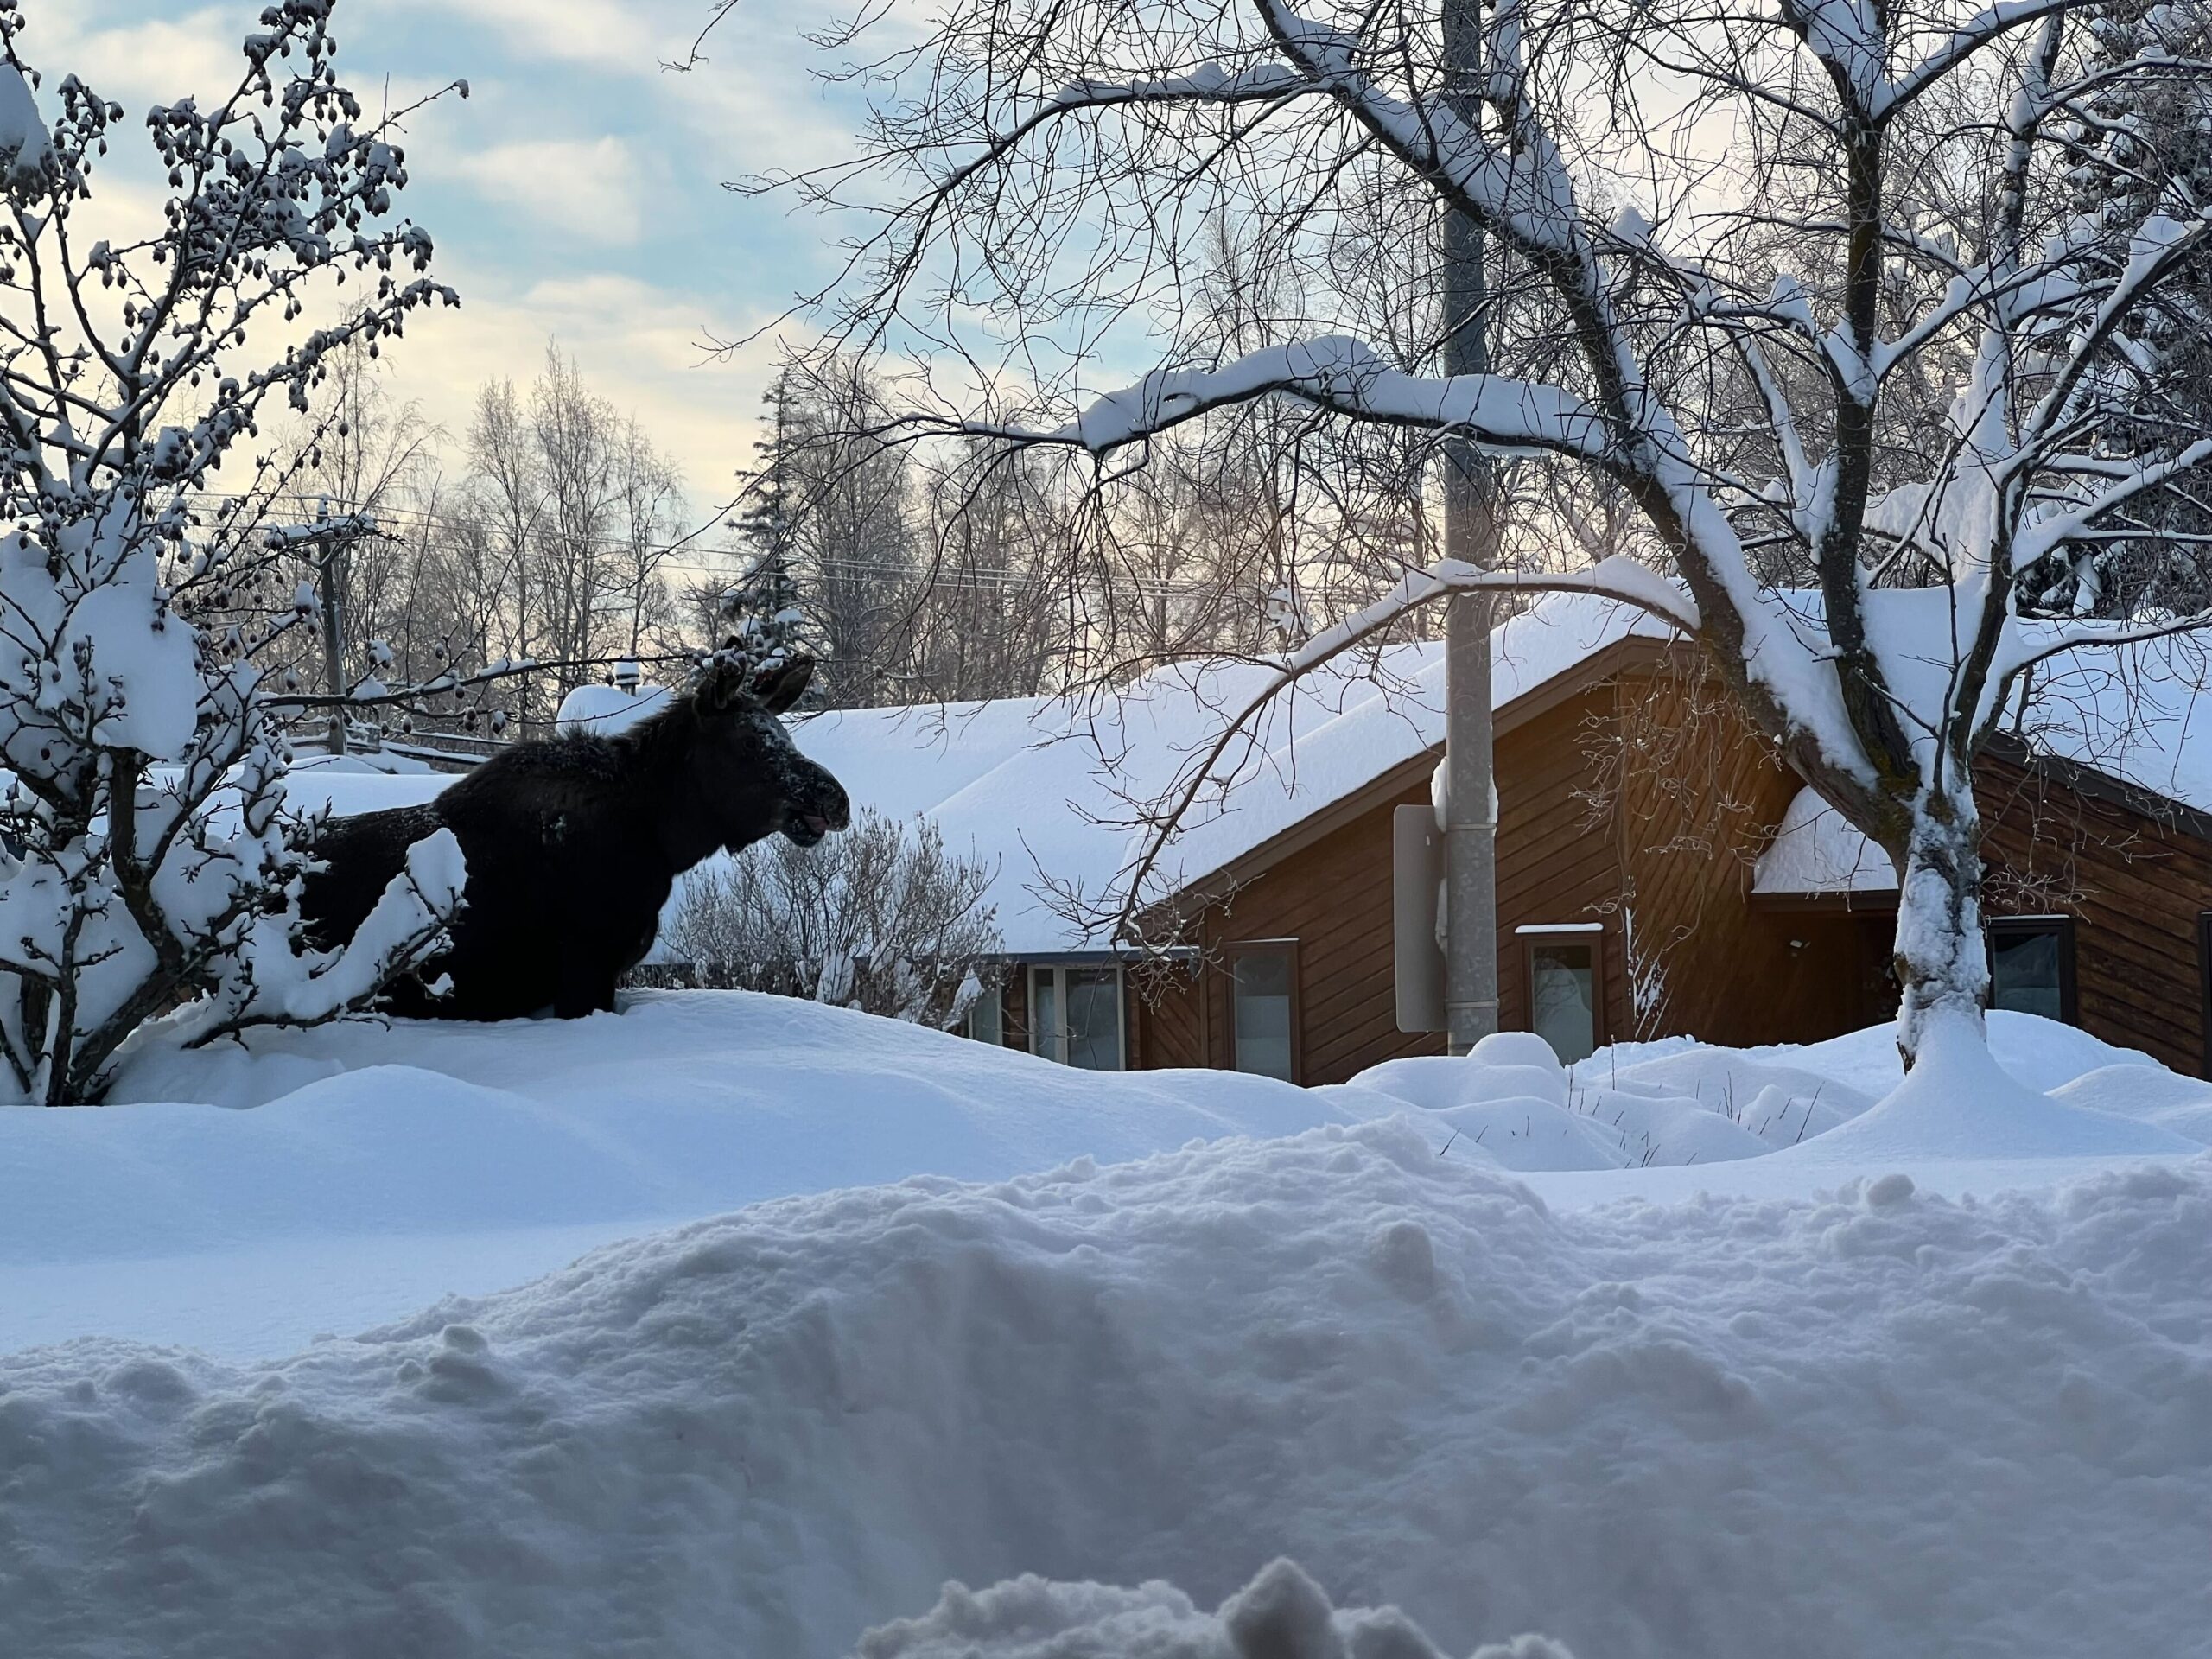 a moose in heavy snow